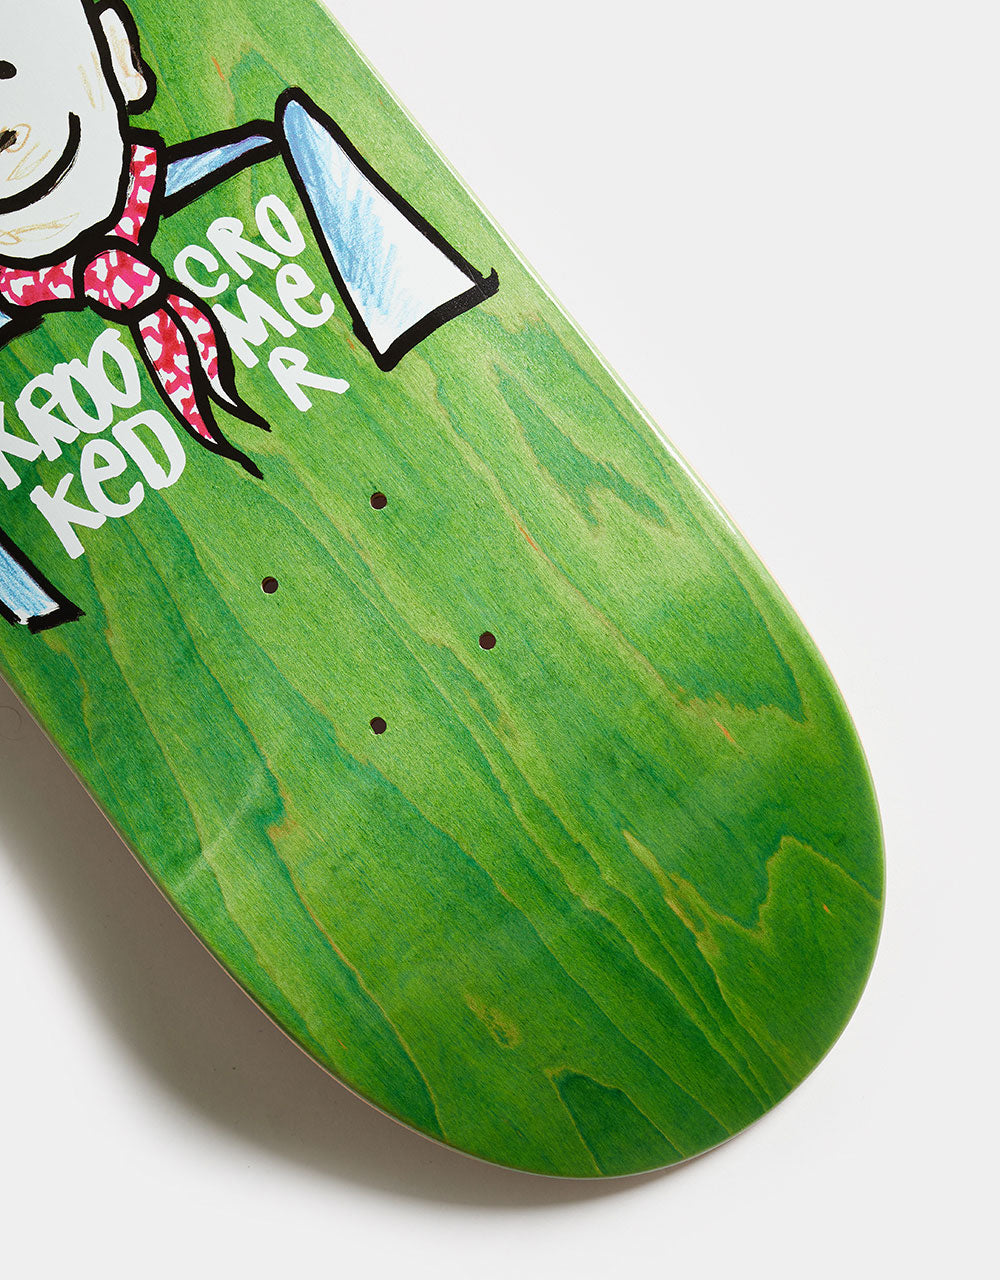 Krooked Cromer Desperado Skateboard Deck - 8.06"